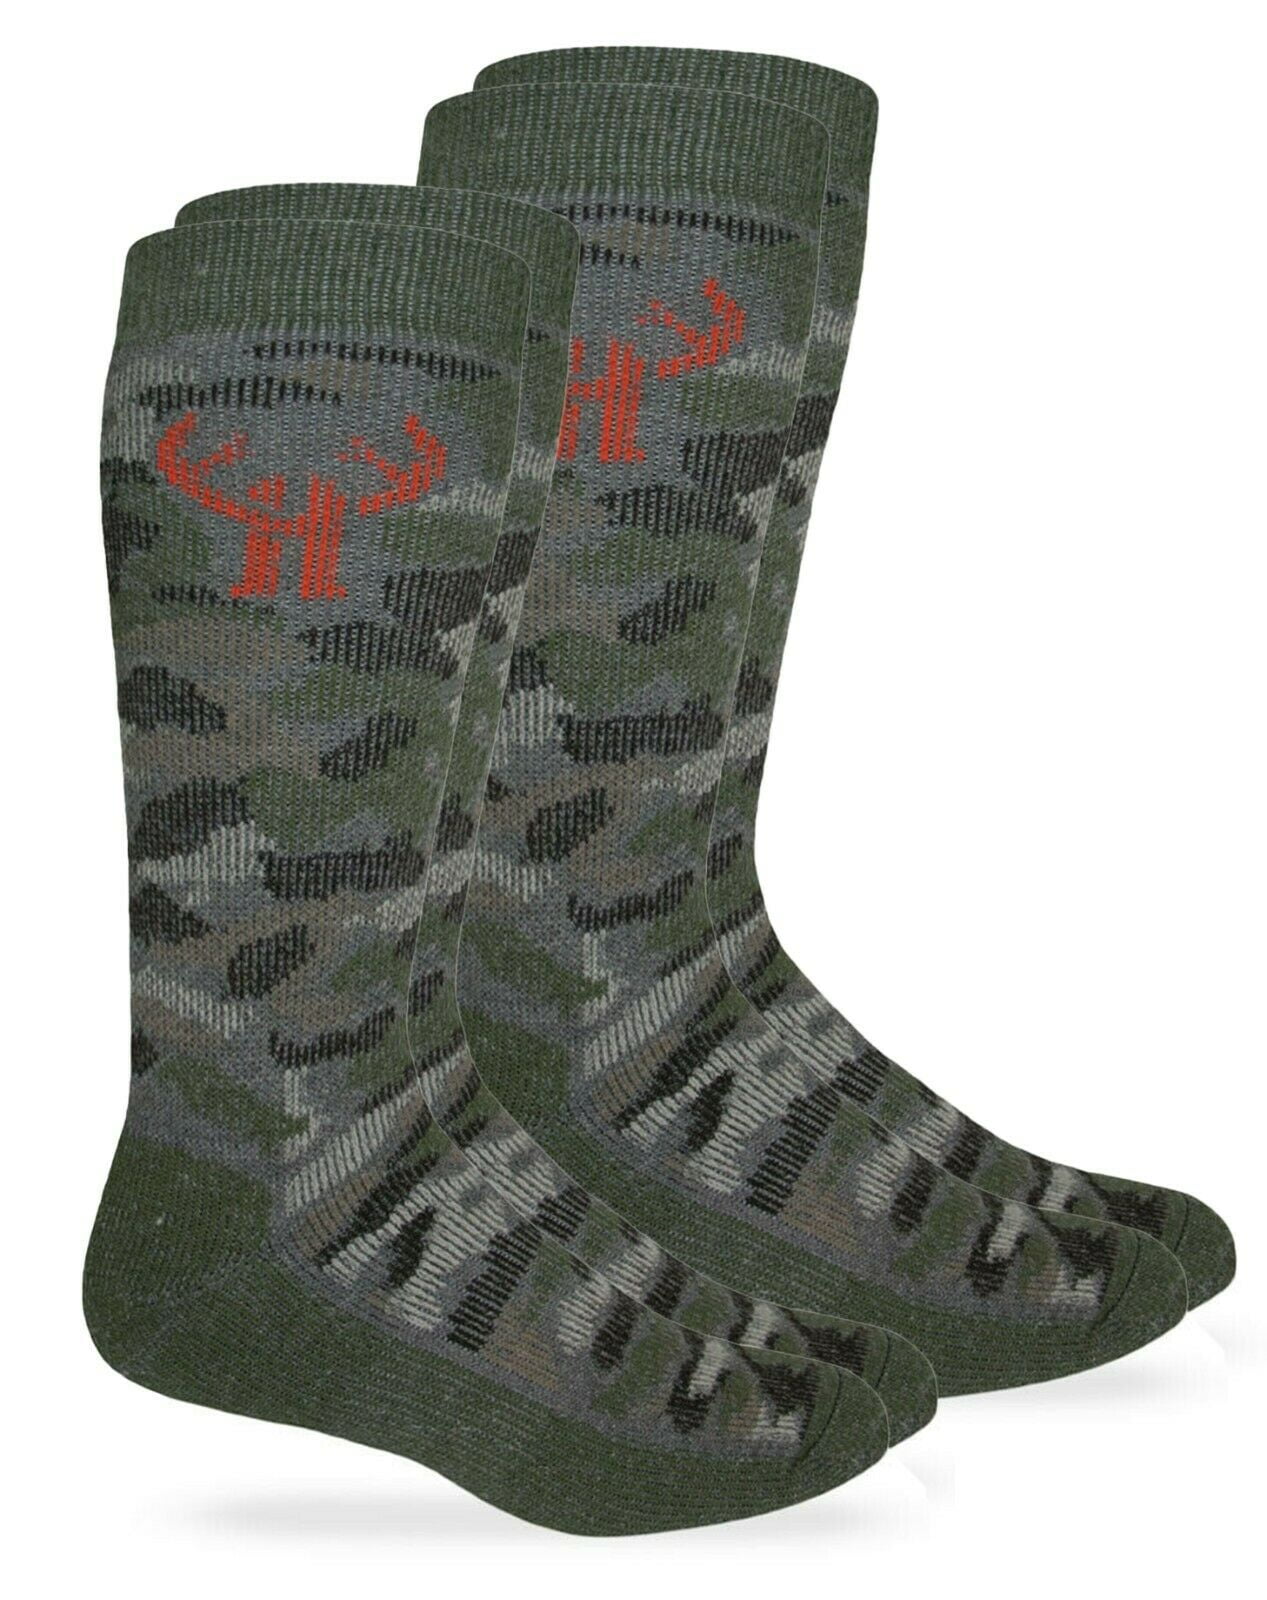 Large 9-13 Huntworth Merino Wool Hunting Outdoor Boot Socks Camo 5 PAIRS 